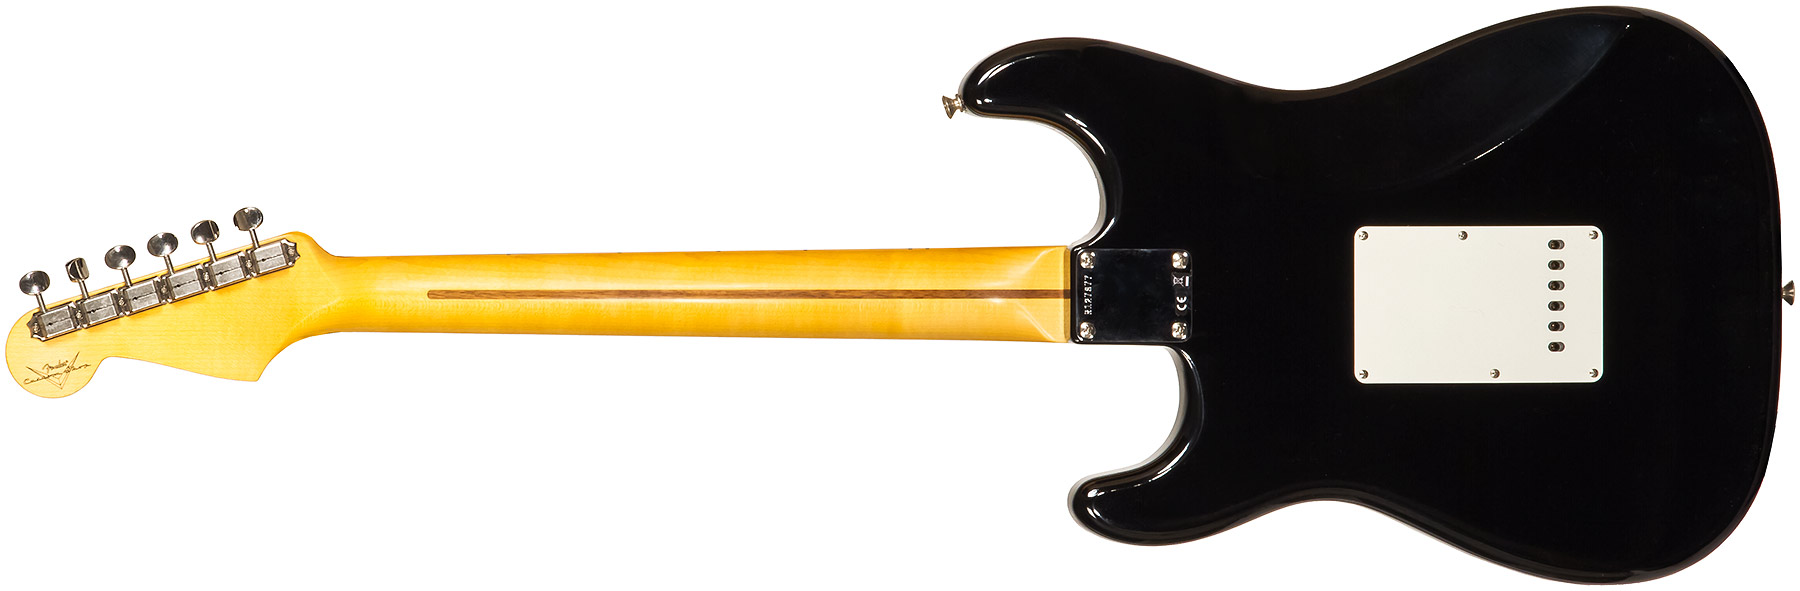 Fender Custom Shop Strat 1955 3s Trem Mn #r127877 - Closet Classic Black - Str shape electric guitar - Variation 1